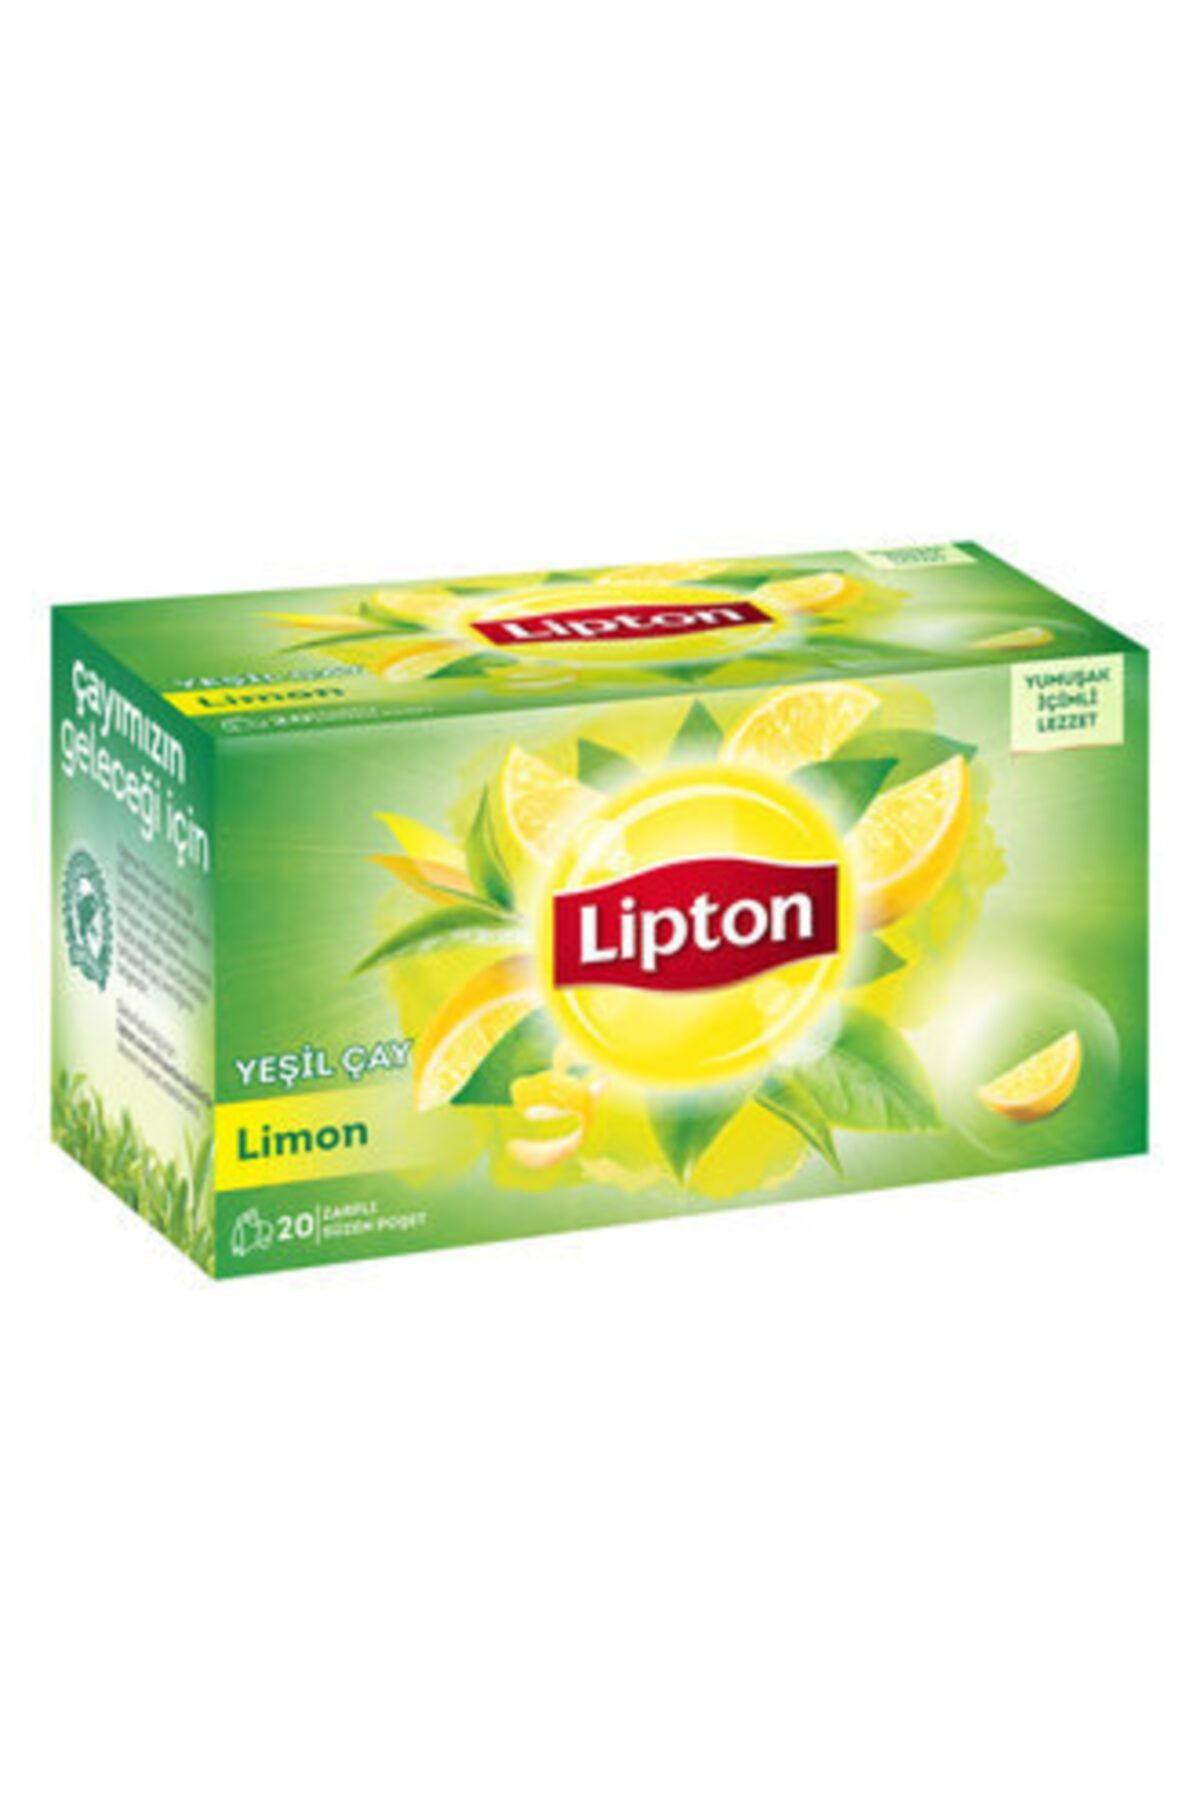 Lipton Lipton Limonlu Yeşil Çay Bardak Poşet 20'Li